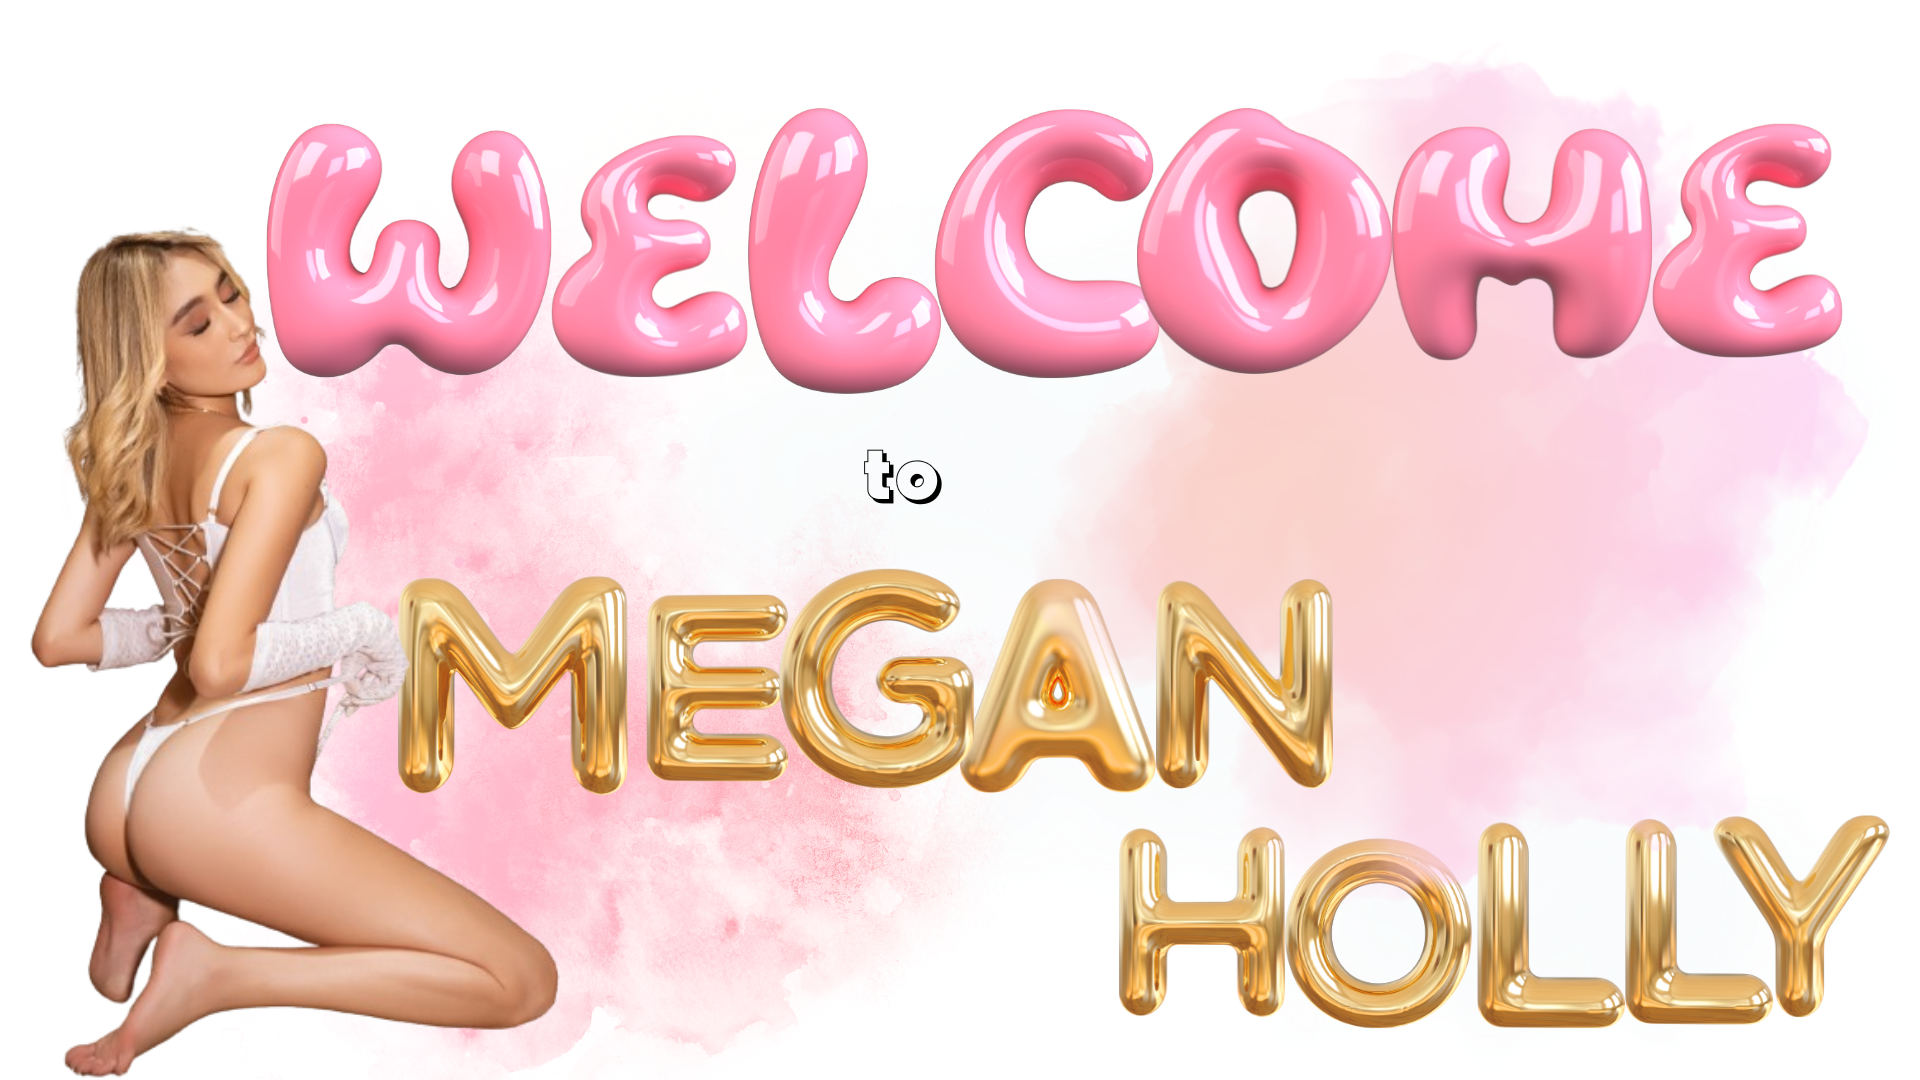 Megan-Holly Megan image: 1